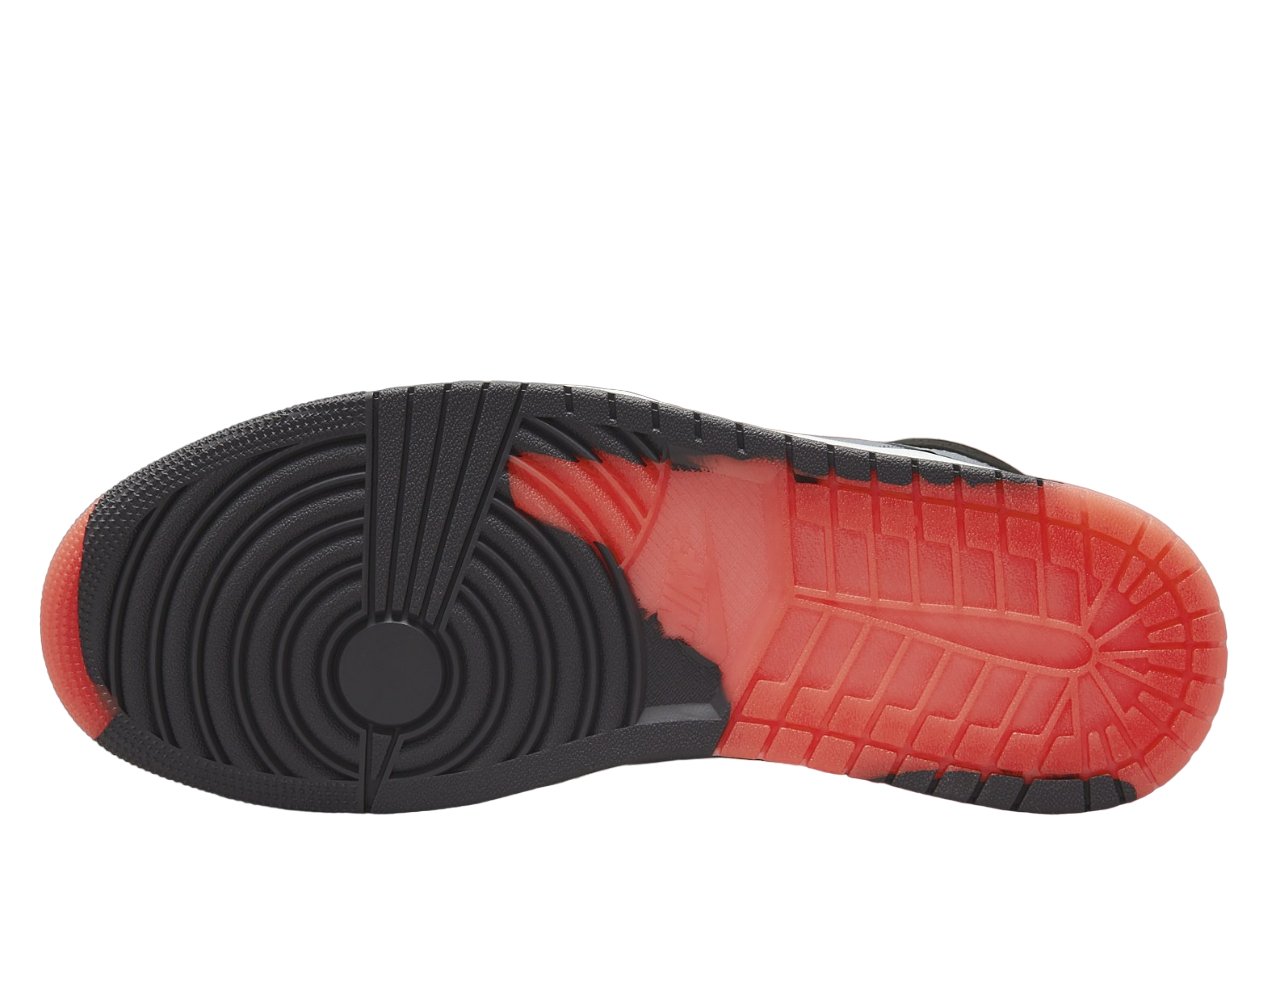 Nike Air Jordan 1 Element GORE-TEX Black Cement ナイキ エアジョーダン1 エレメント ゴアテックス ブラックセメント - VICTORIA SNKRS